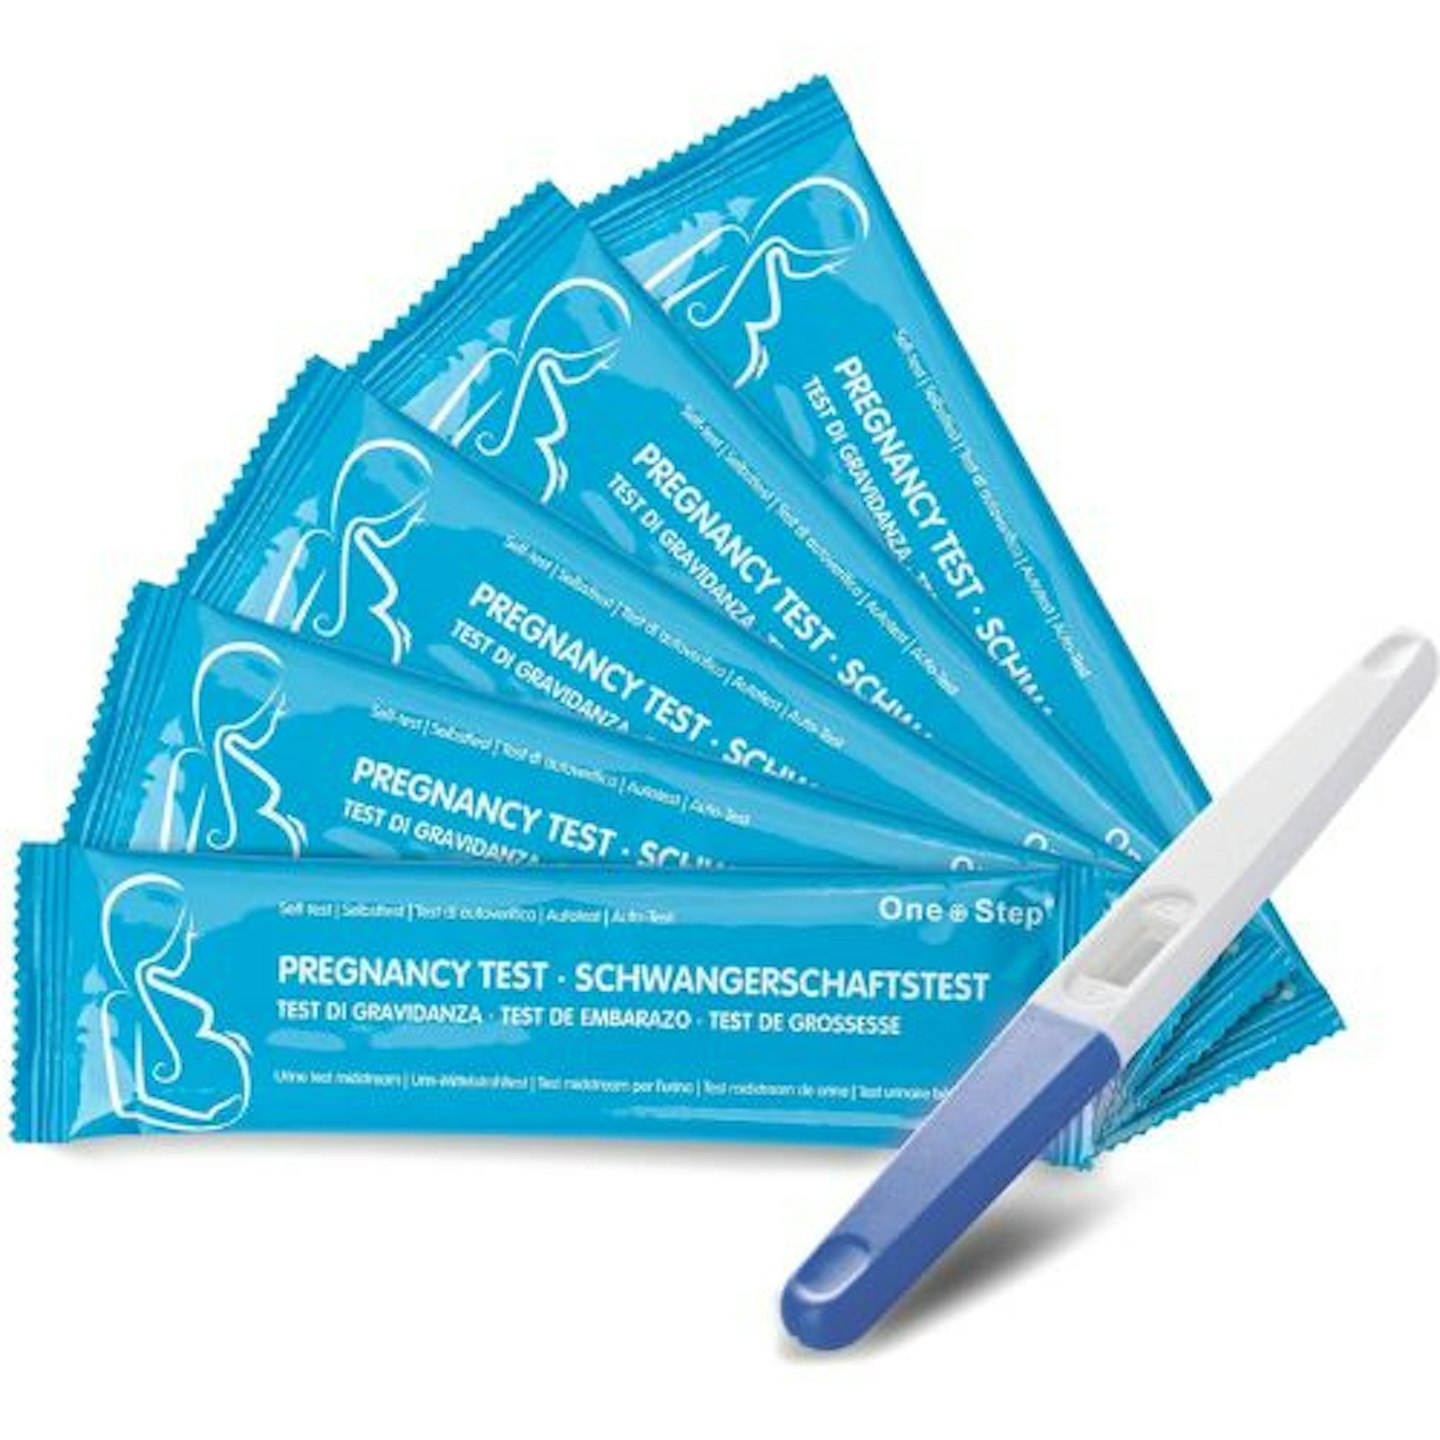 One Step - best pregnancy test